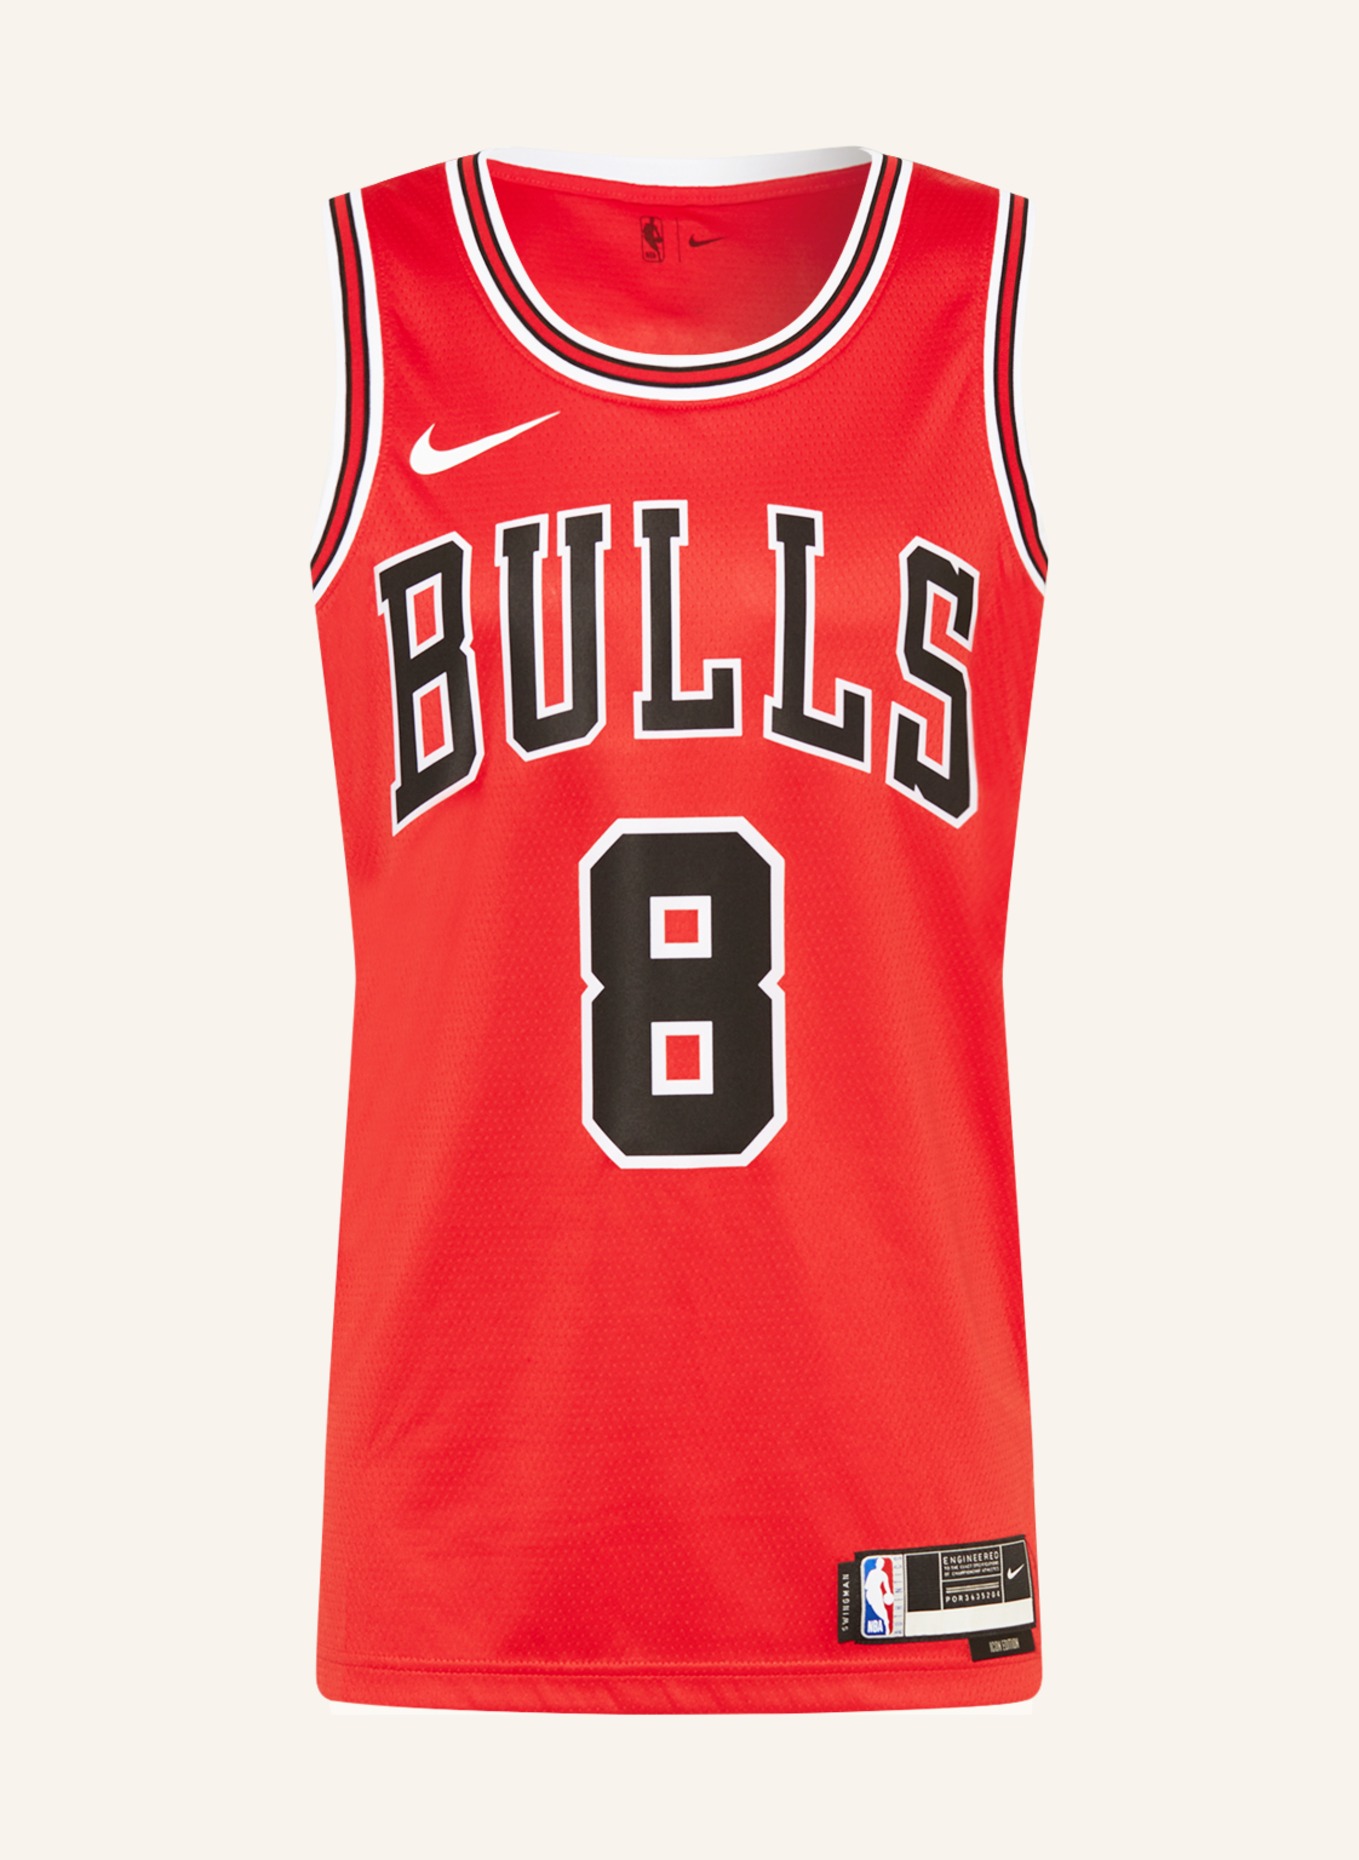 Chicago Bulls Blank Black Swingman Jersey on sale,for Cheap